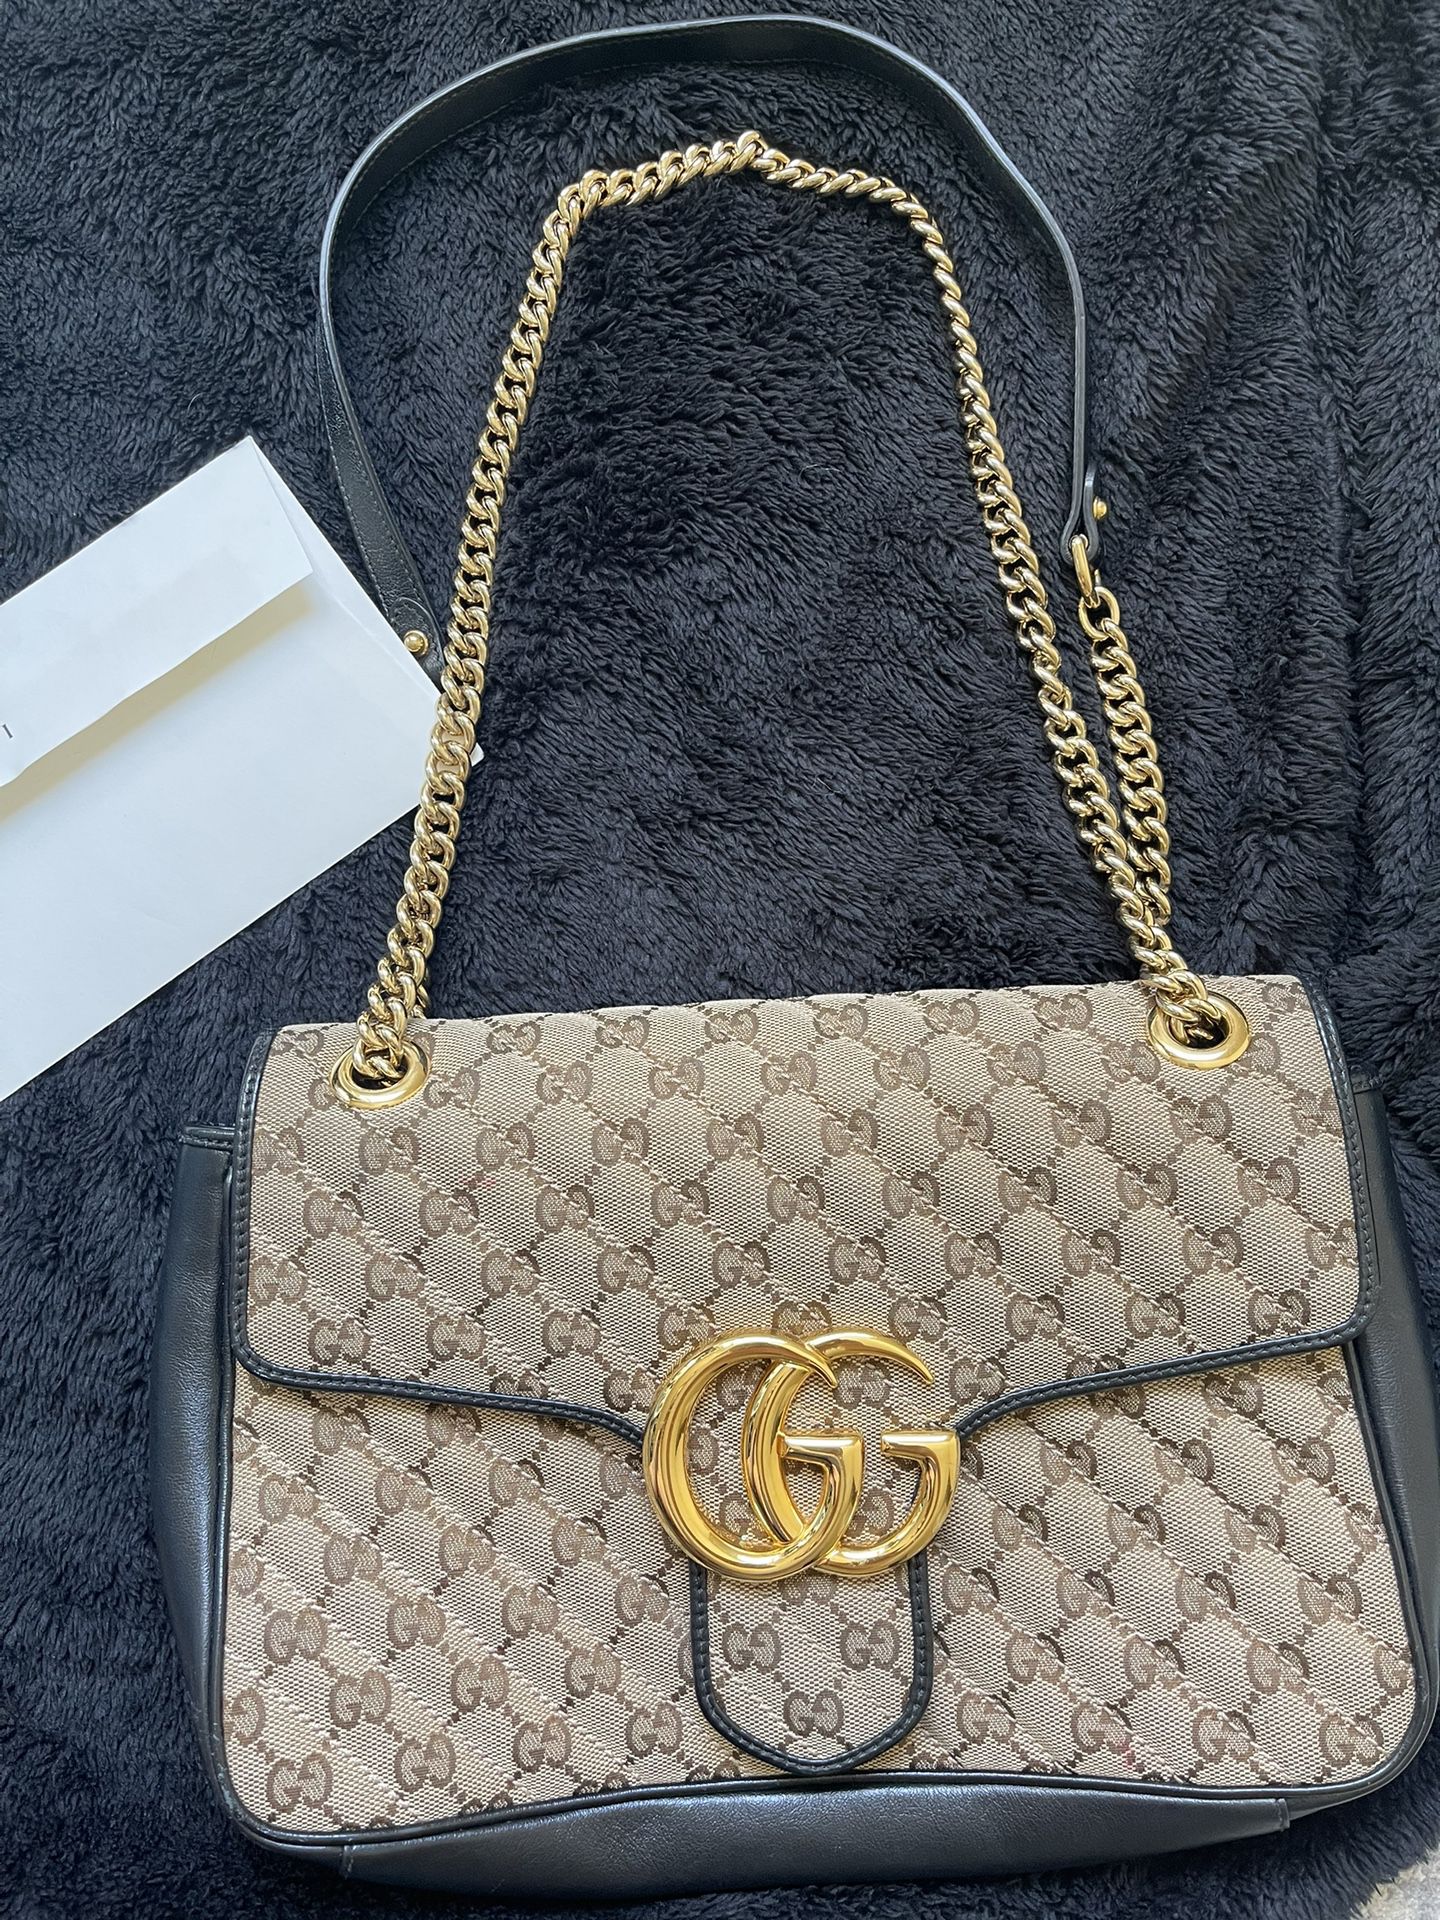 Authentic**** Gucci Marmont medium Shoulder Bag